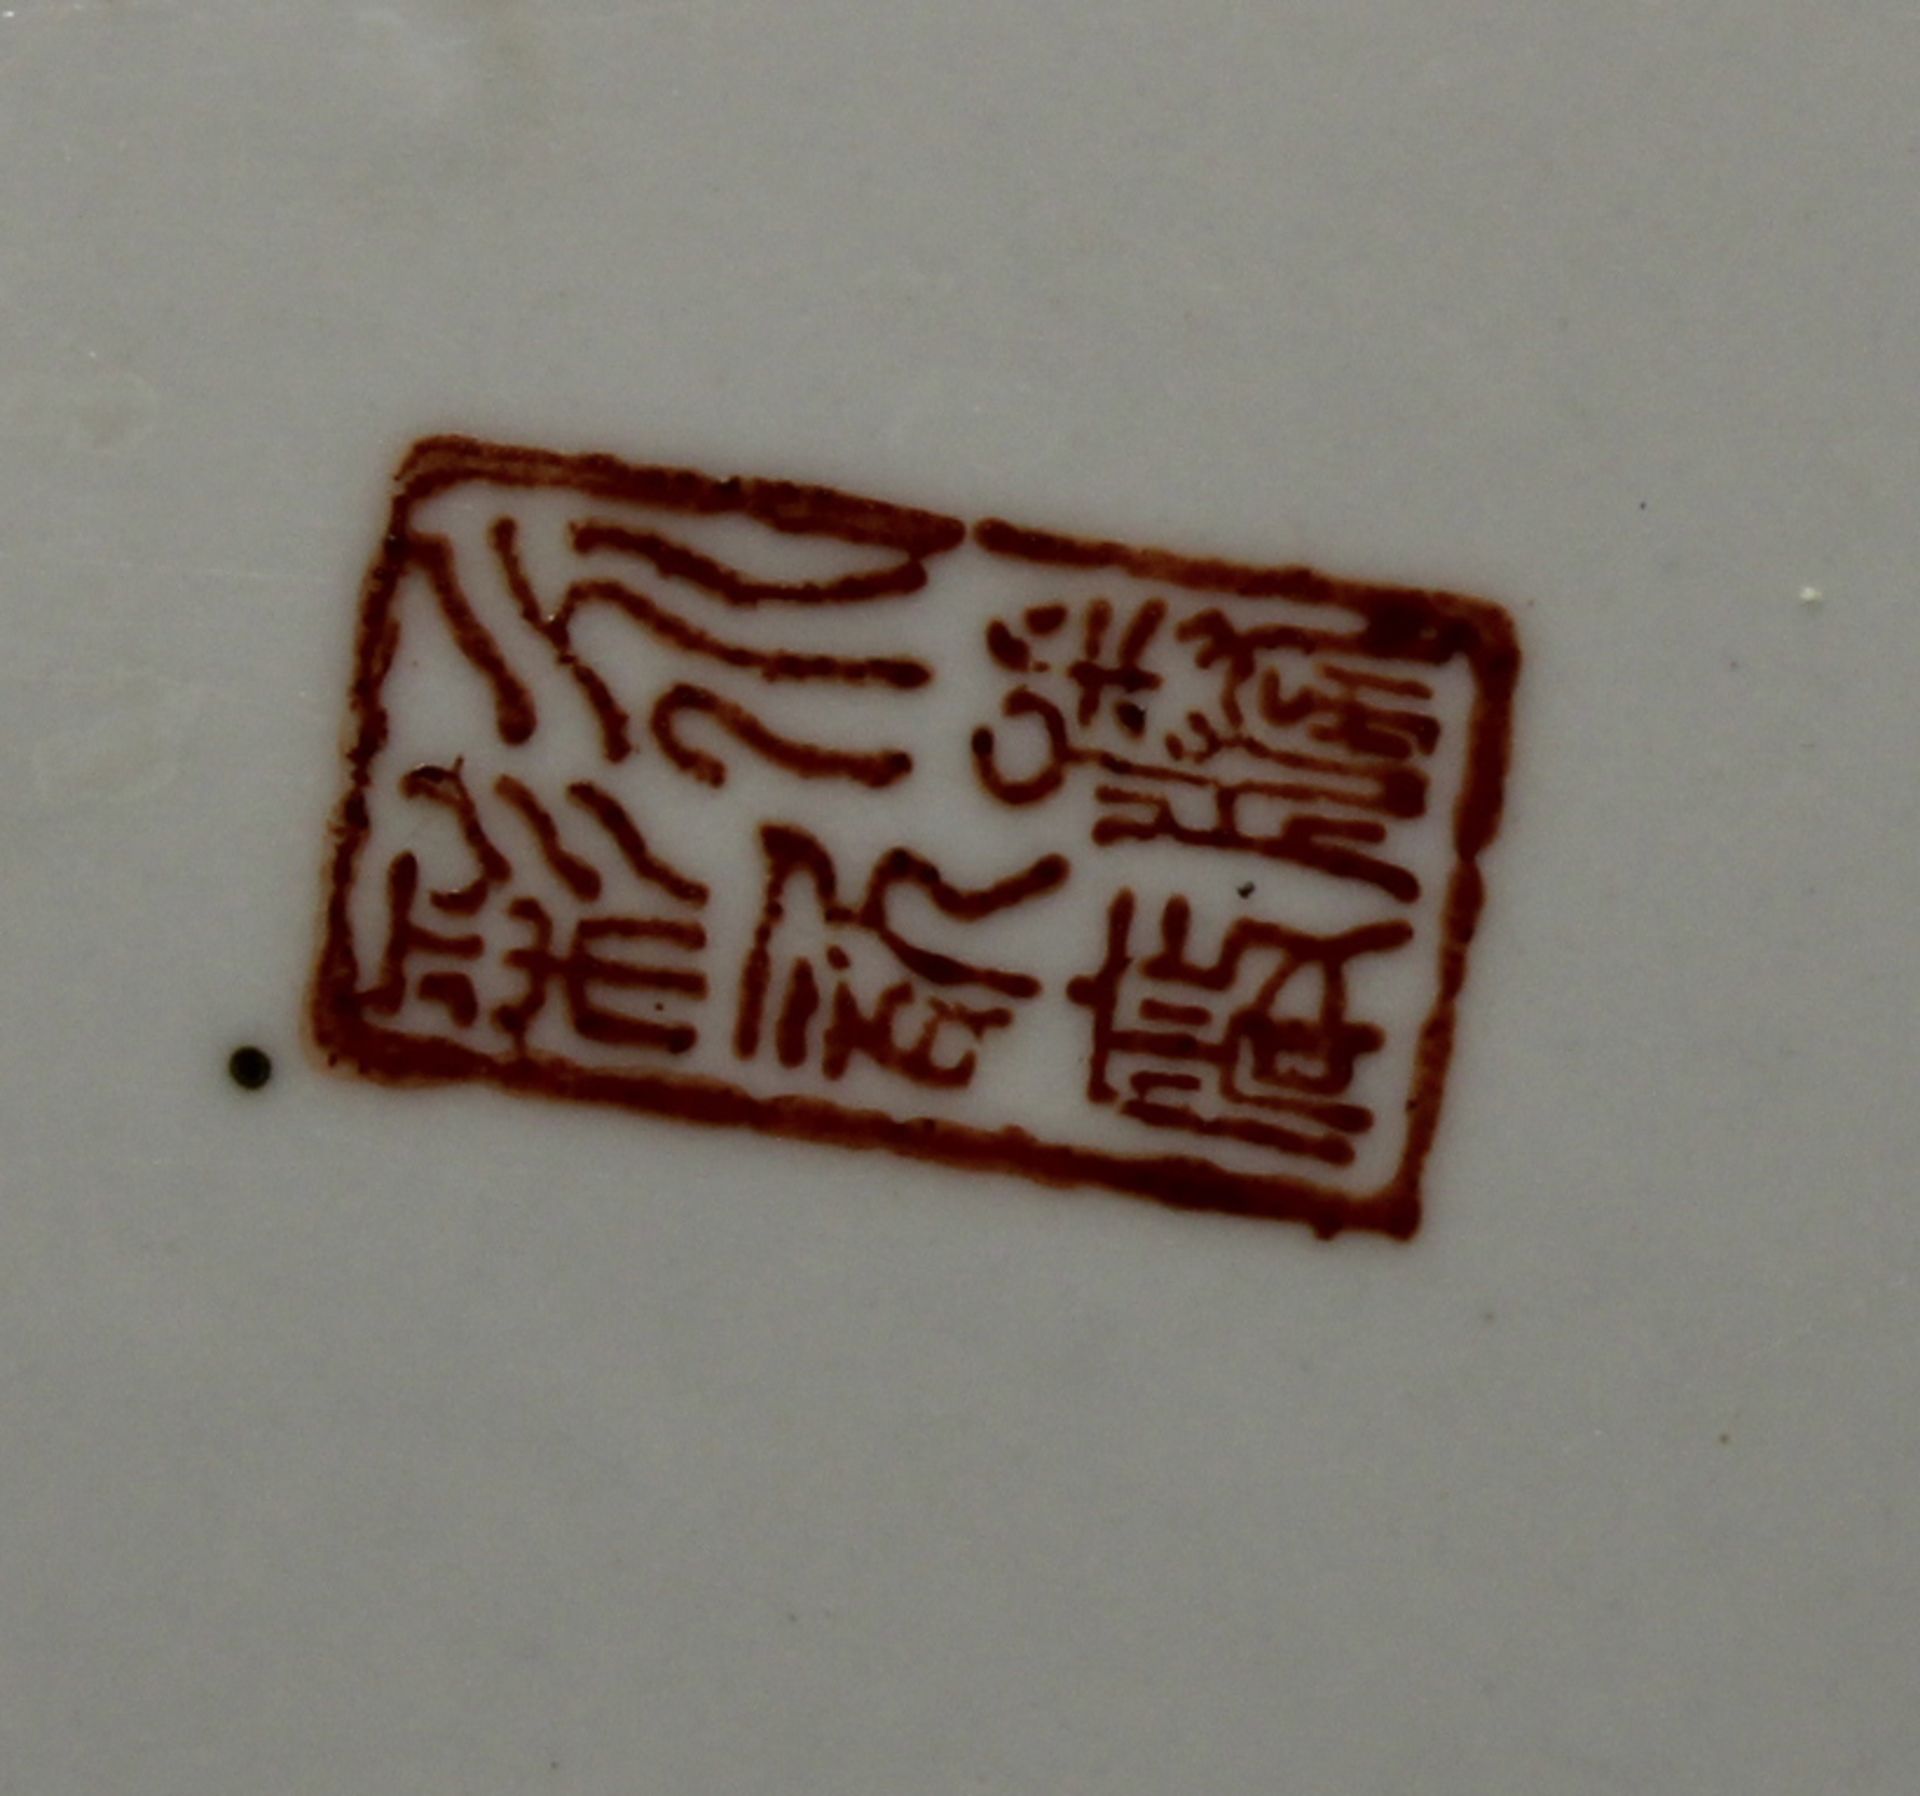 Platte, wohl China, 20. Jh., Porzellan, Umdruckdekor in famille rose, handkoloriert, im Spiegel Wap - Image 3 of 3